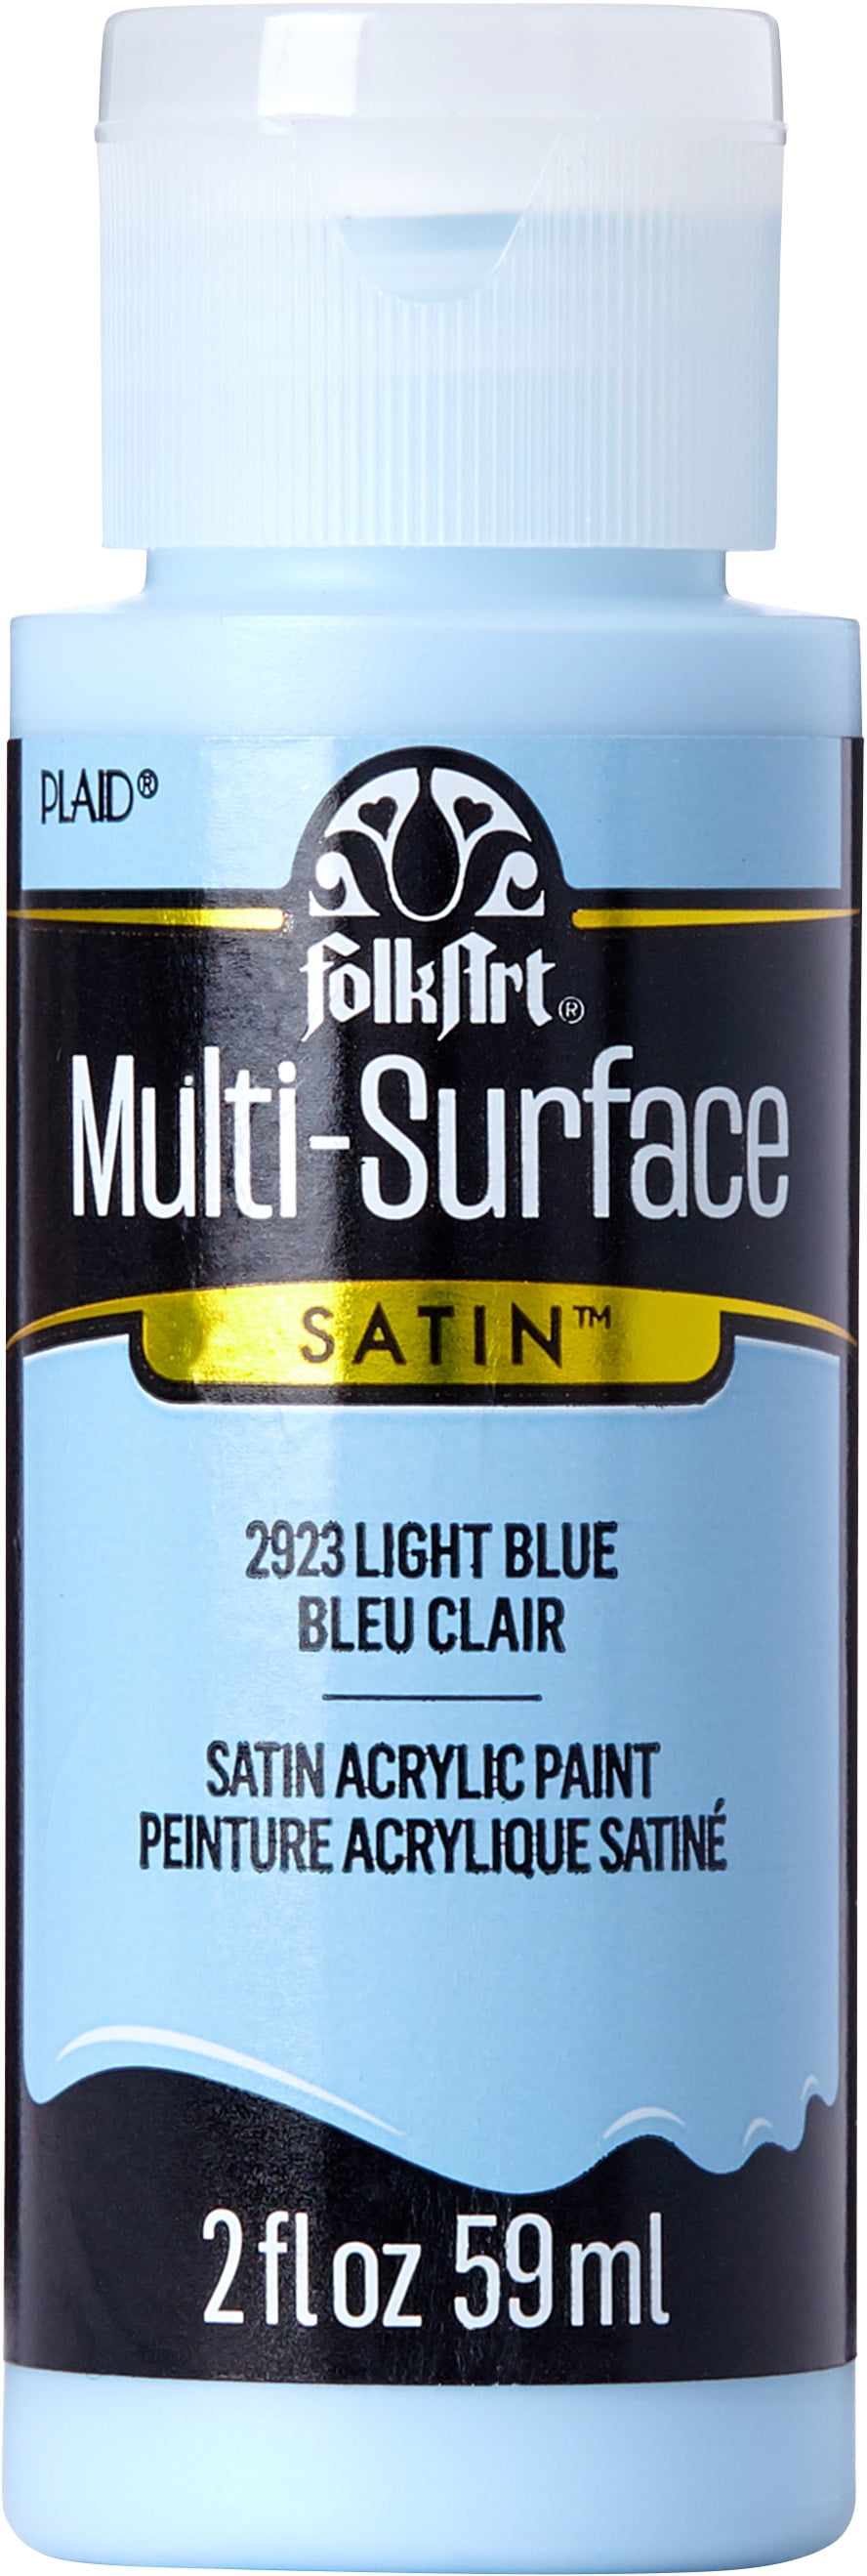 FolkArt Multi-Surface Acrylic Craft Paint, Satin Finish, Light Blue, 2 fl oz